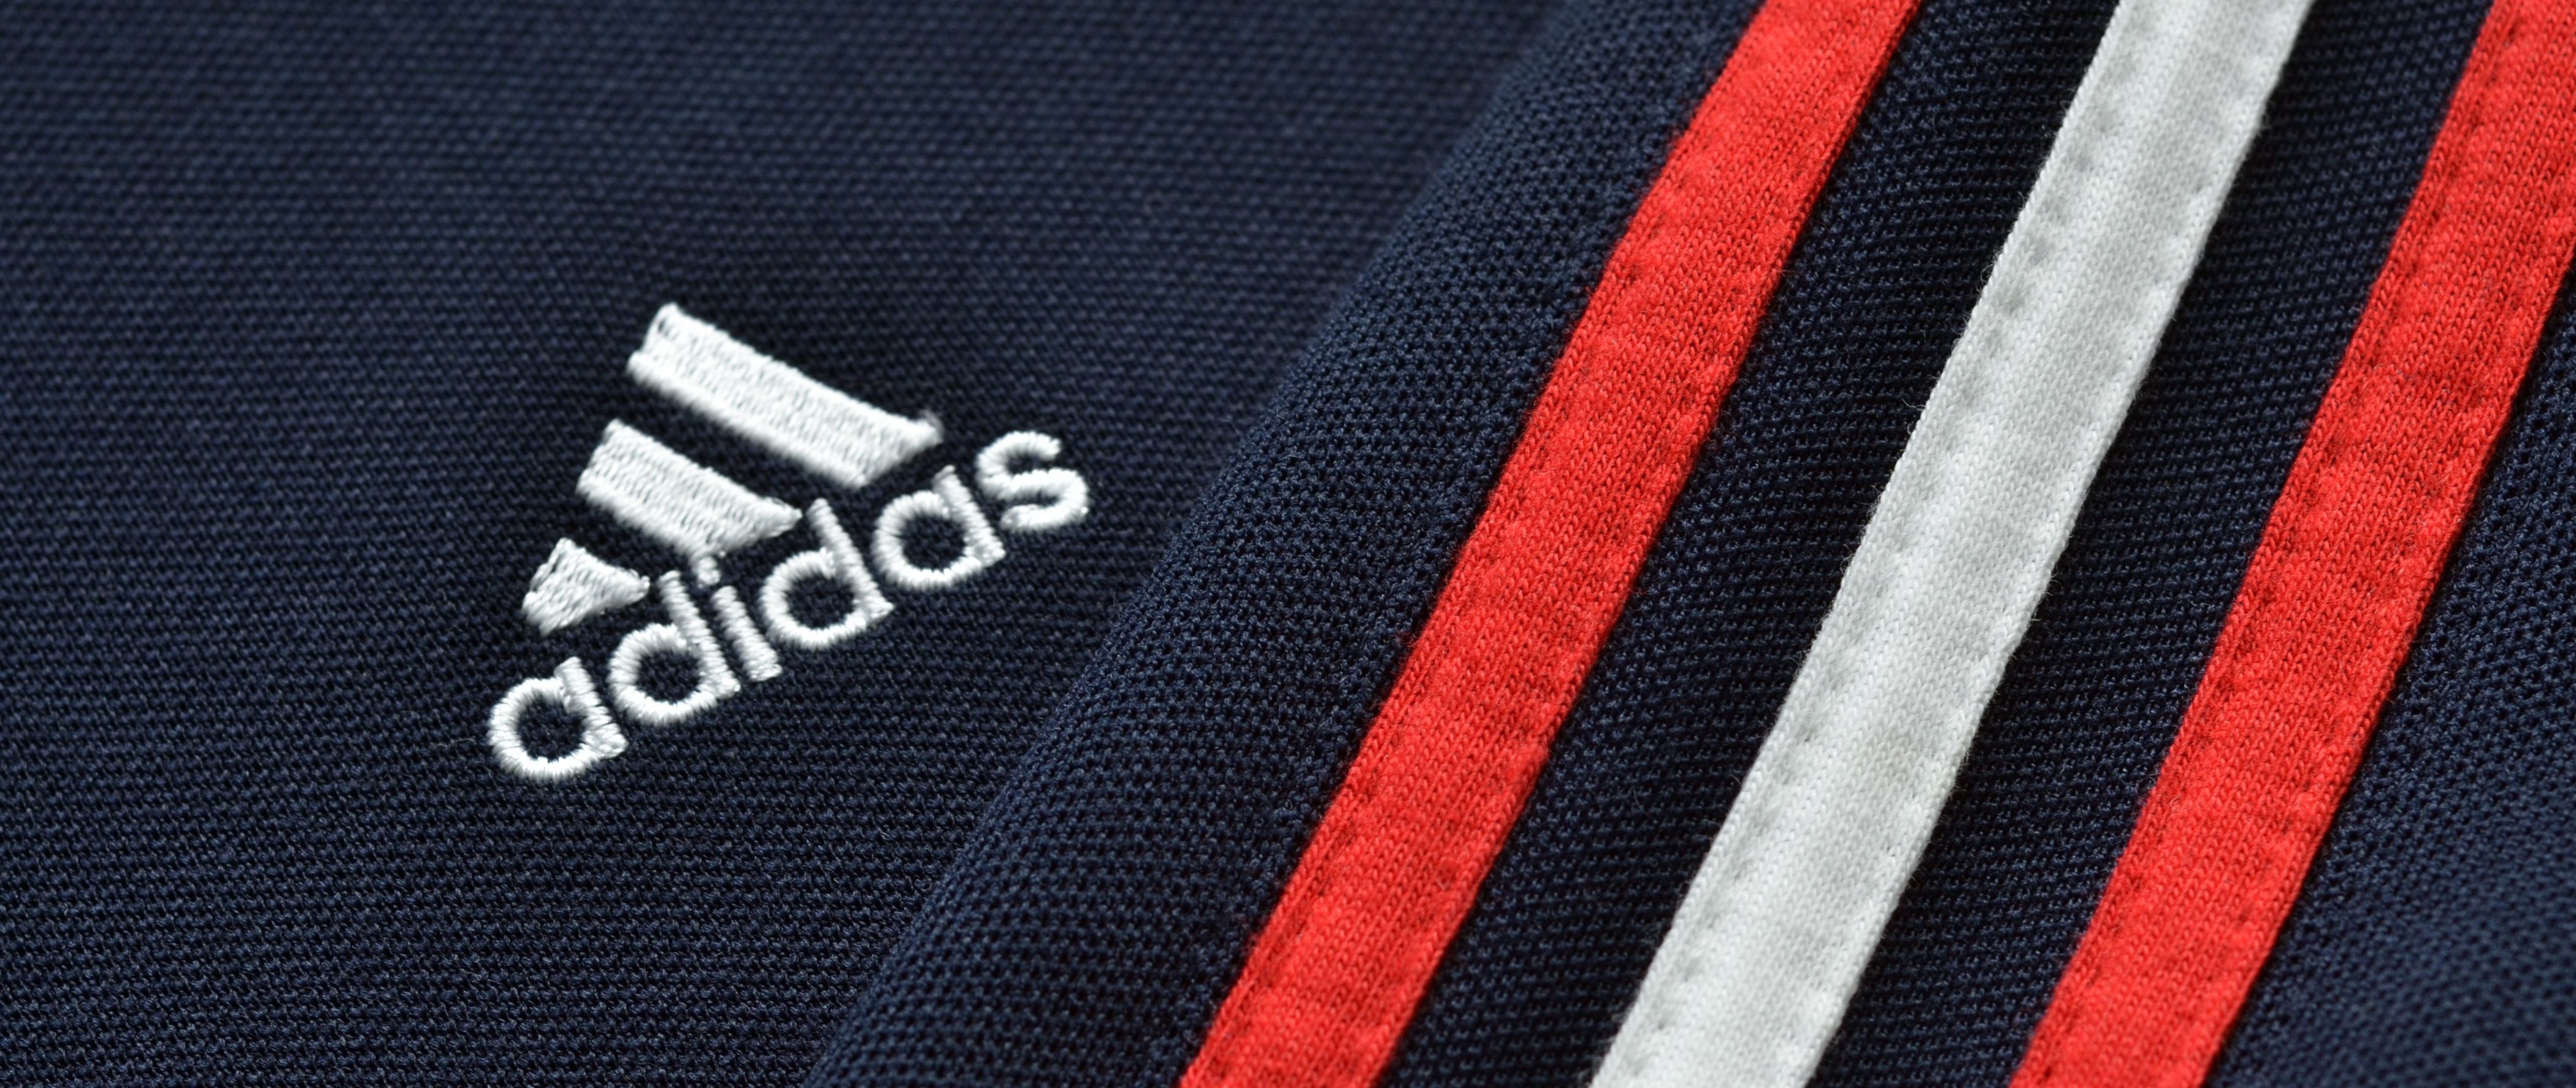 Adidas & J. Crew clash in three stripes Lawsuit